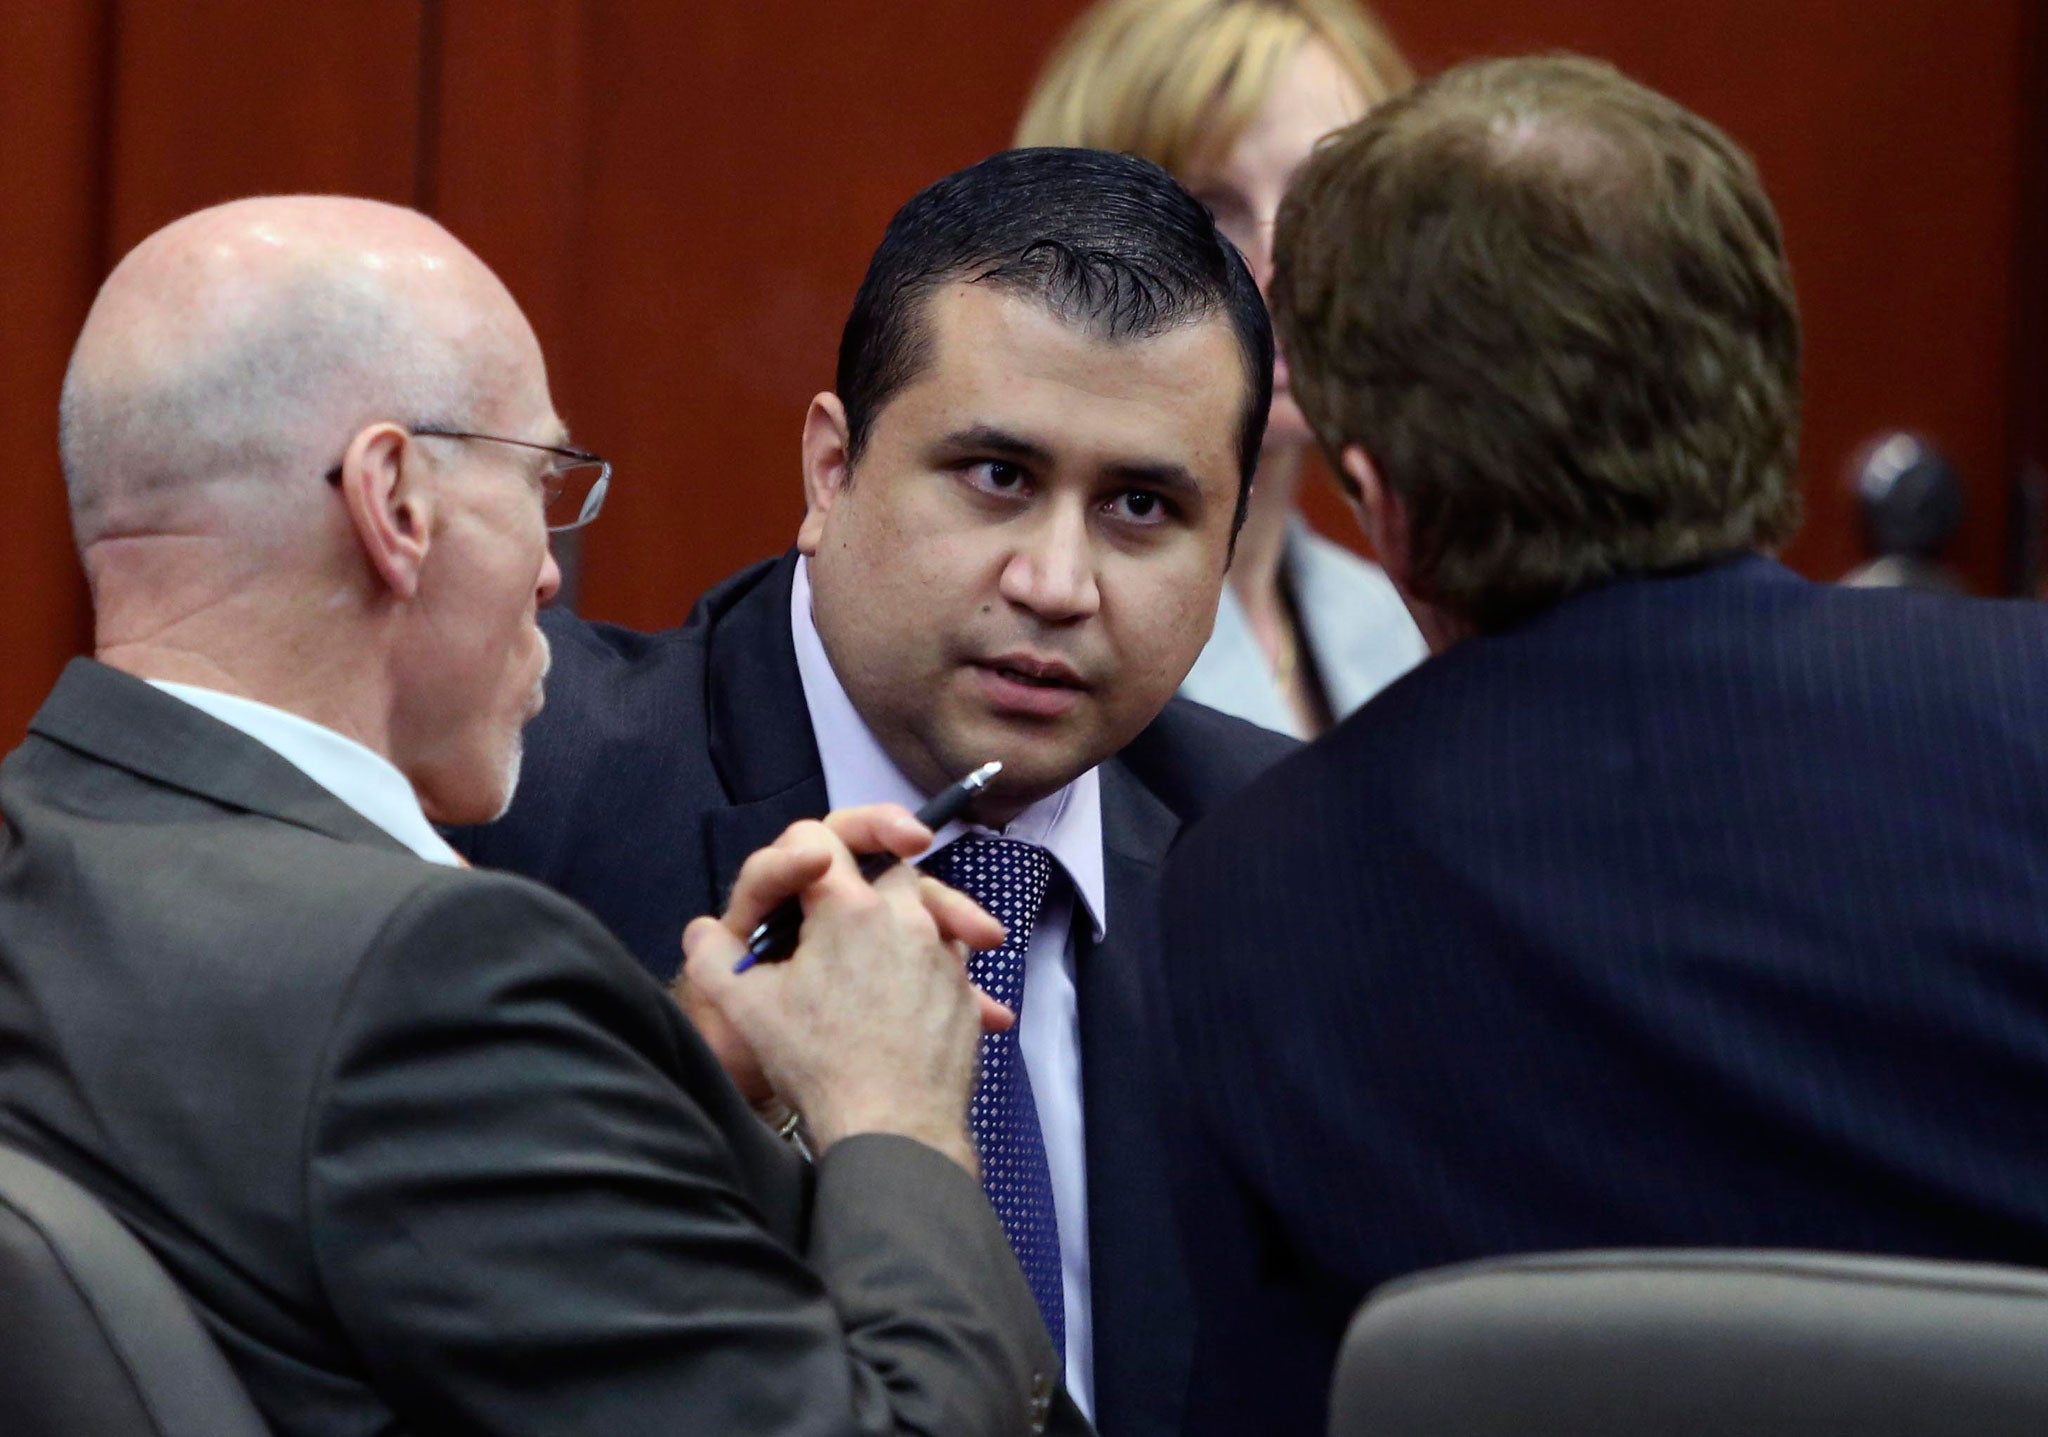 George Zimmerman during his 2012 trial